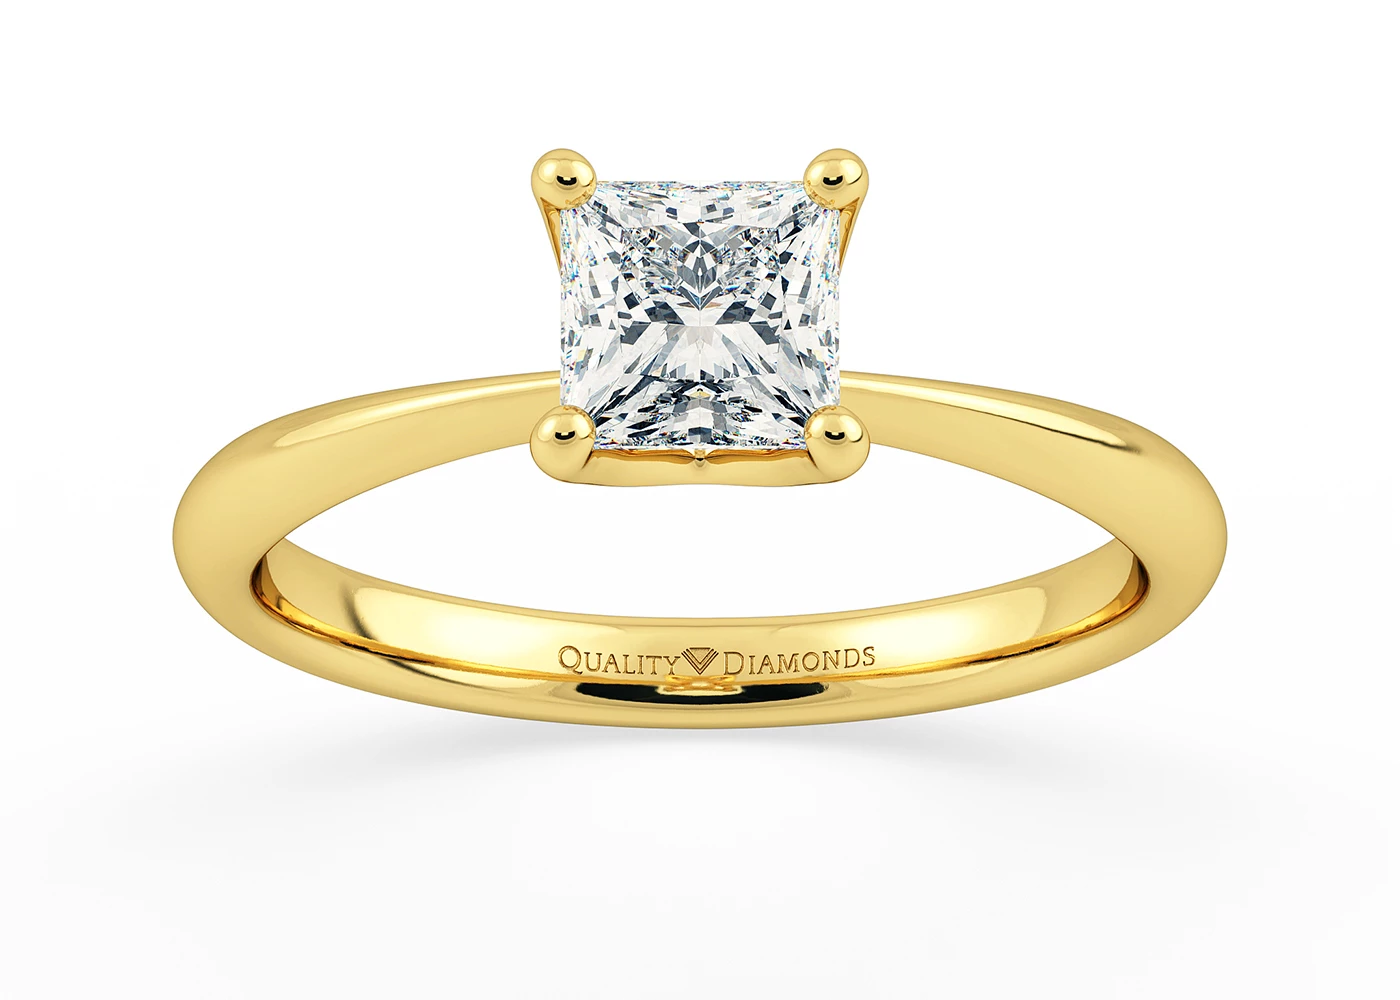 Princess Amorette Diamond Ring in 18K Yellow Gold